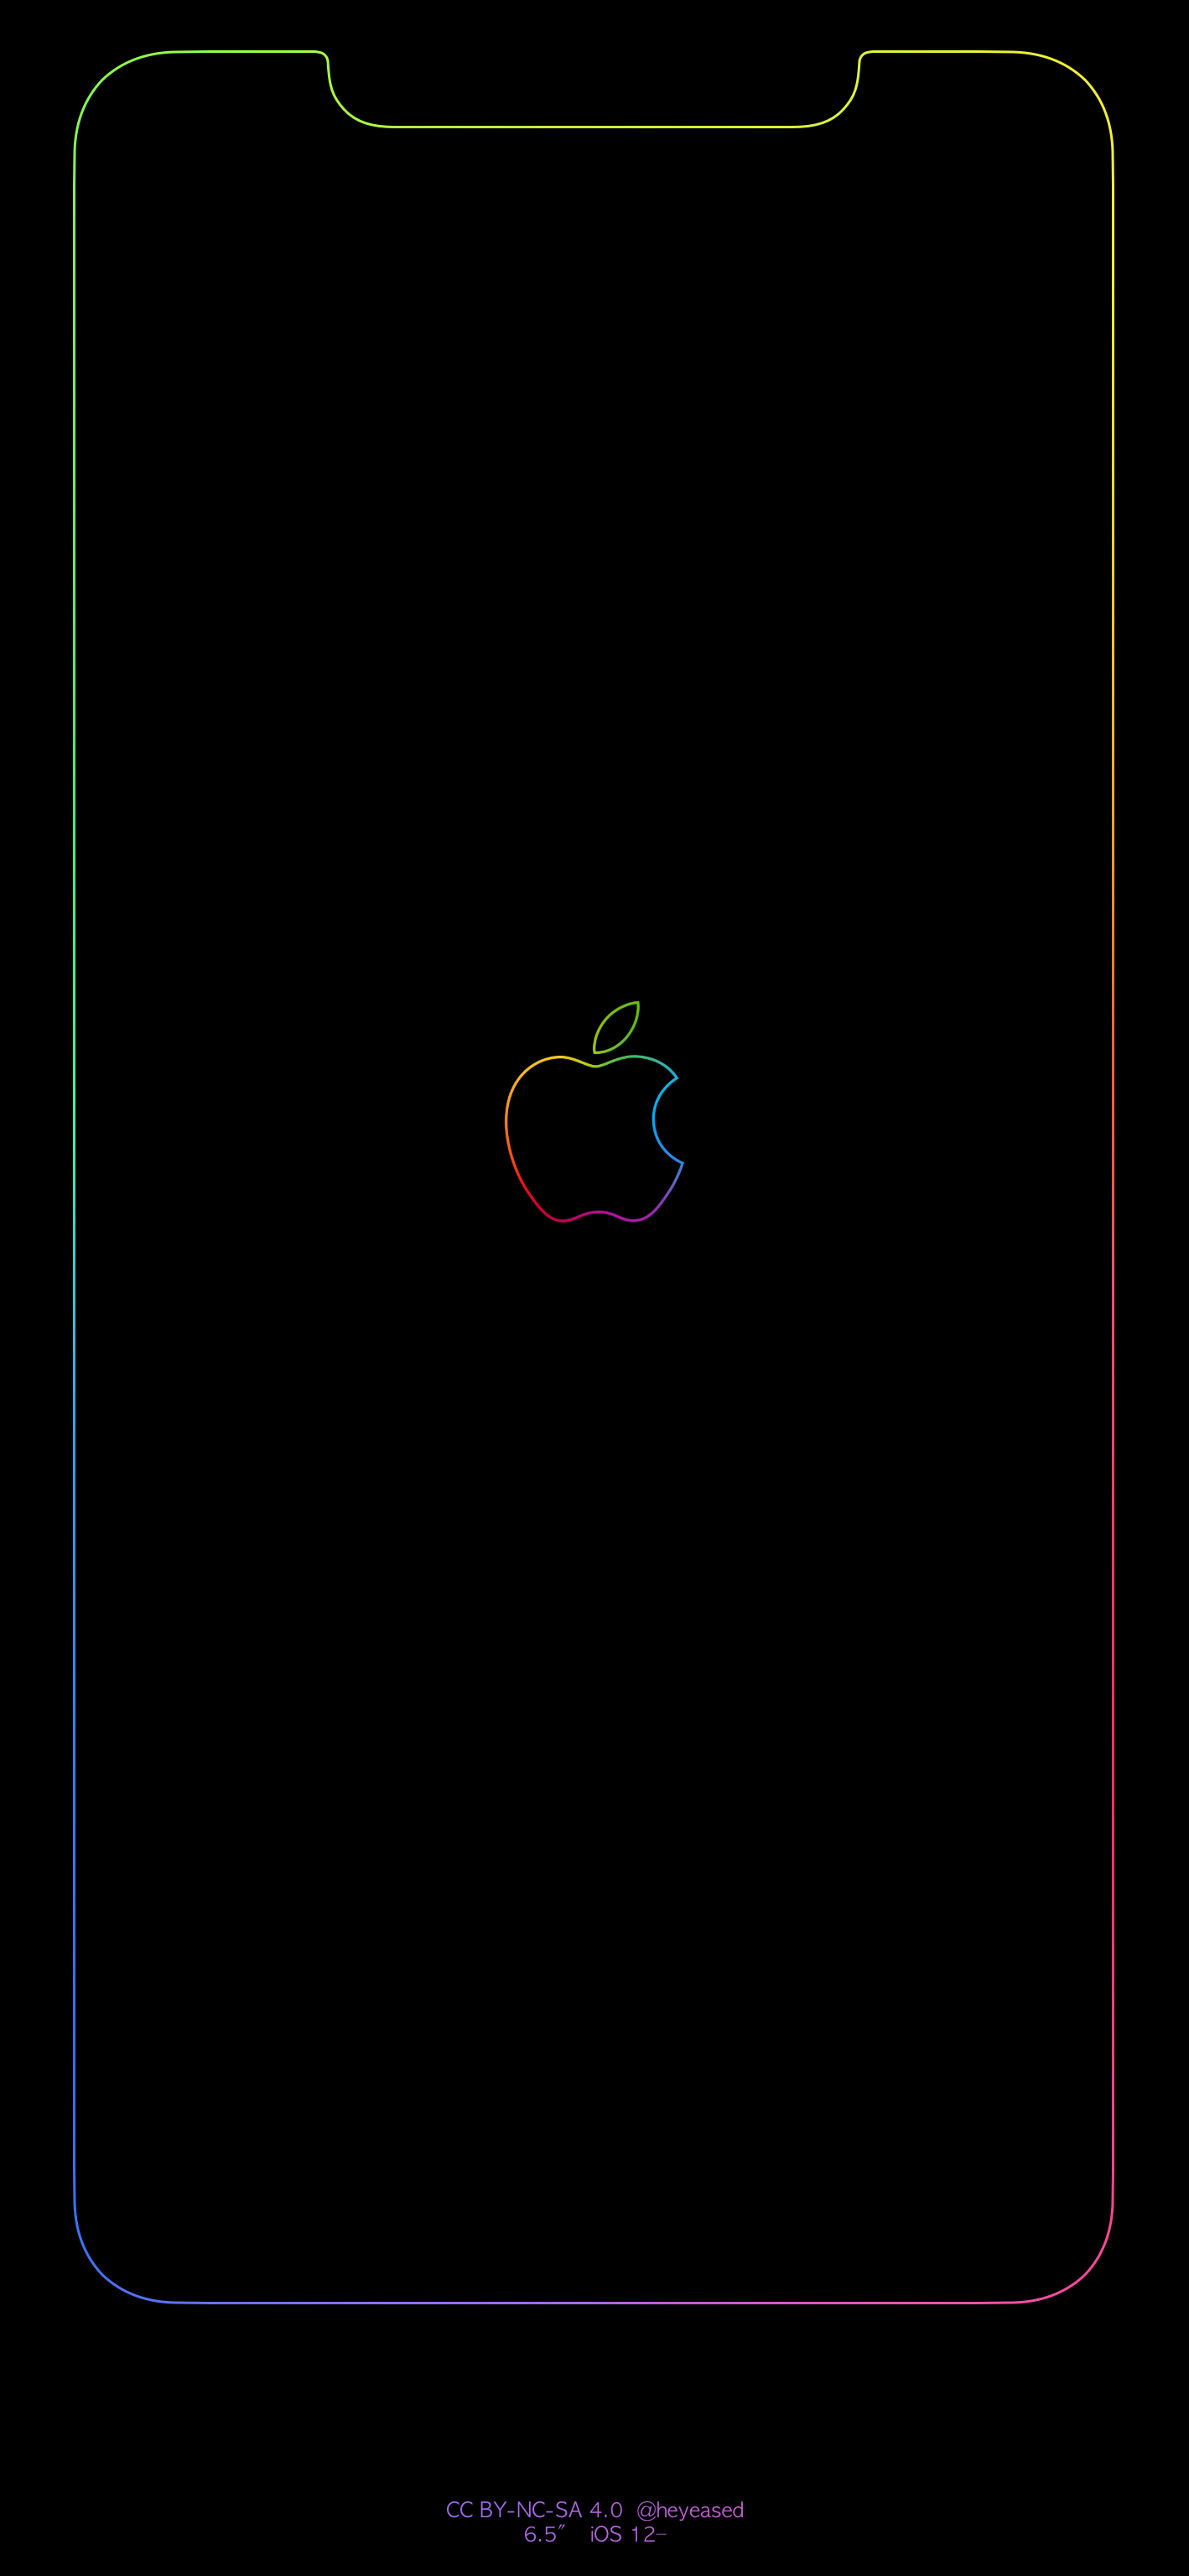 Rainbow border & apple logo iPhone wallpapers Imgur links